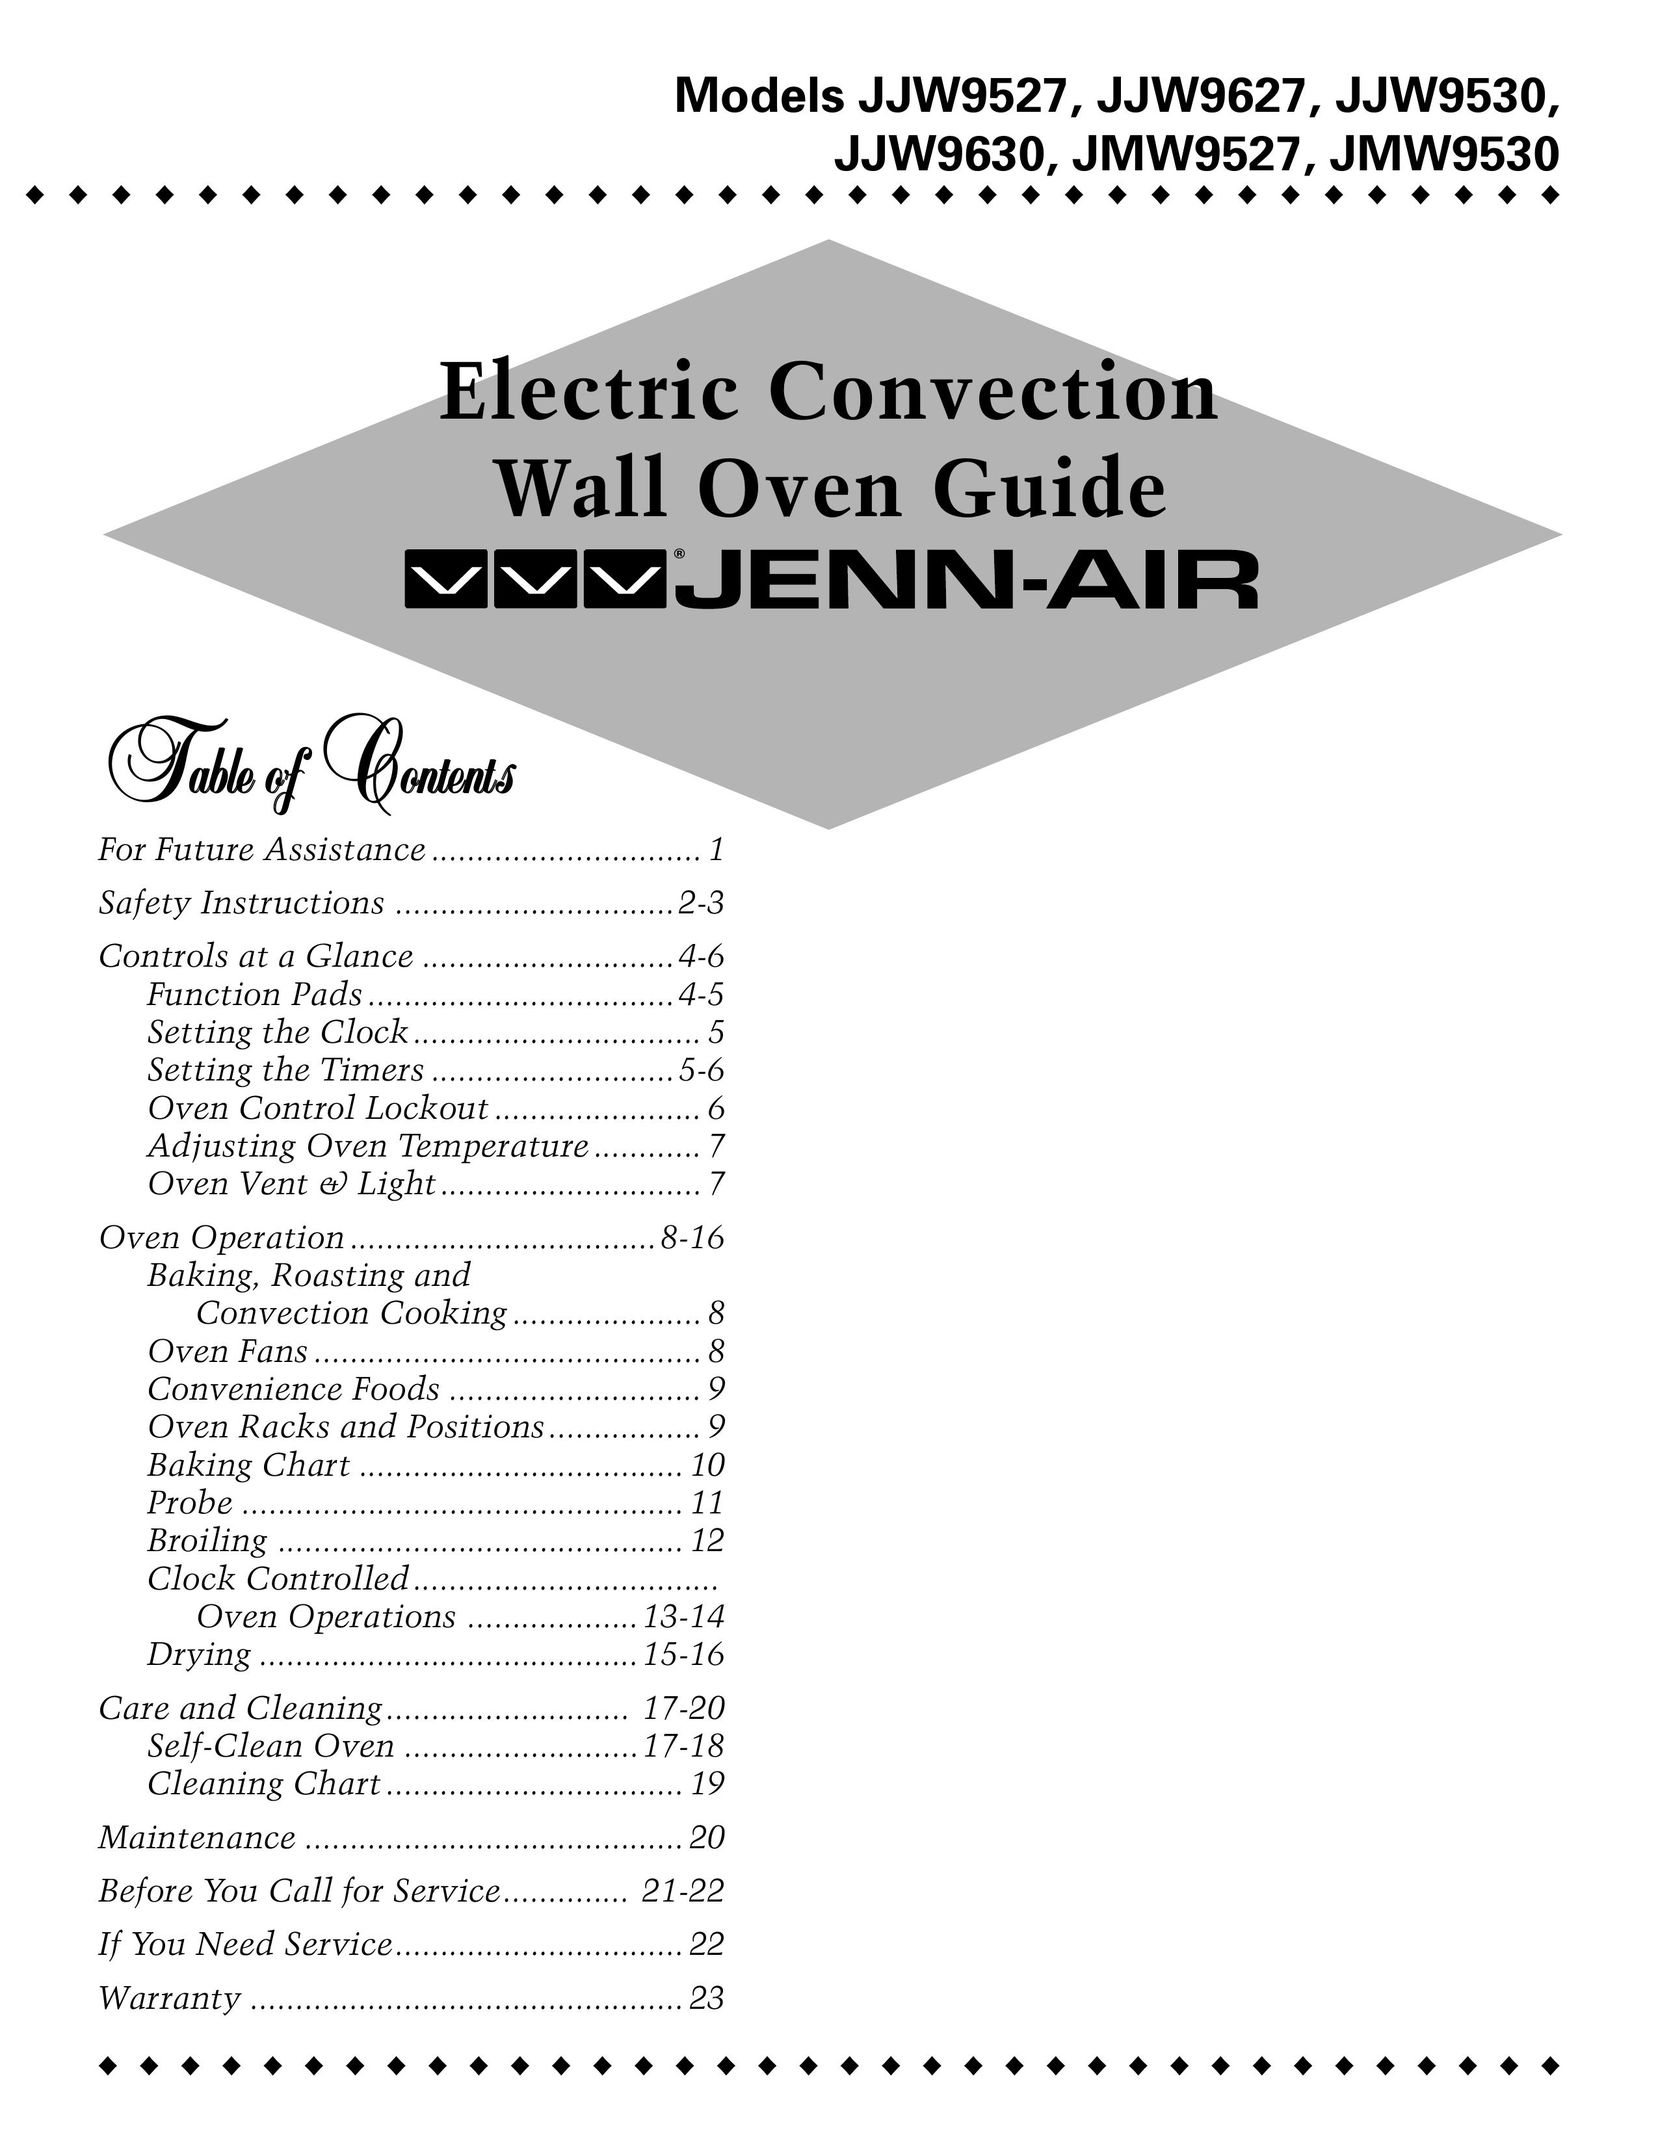 Jenn-Air JJW9527 Convection Oven User Manual